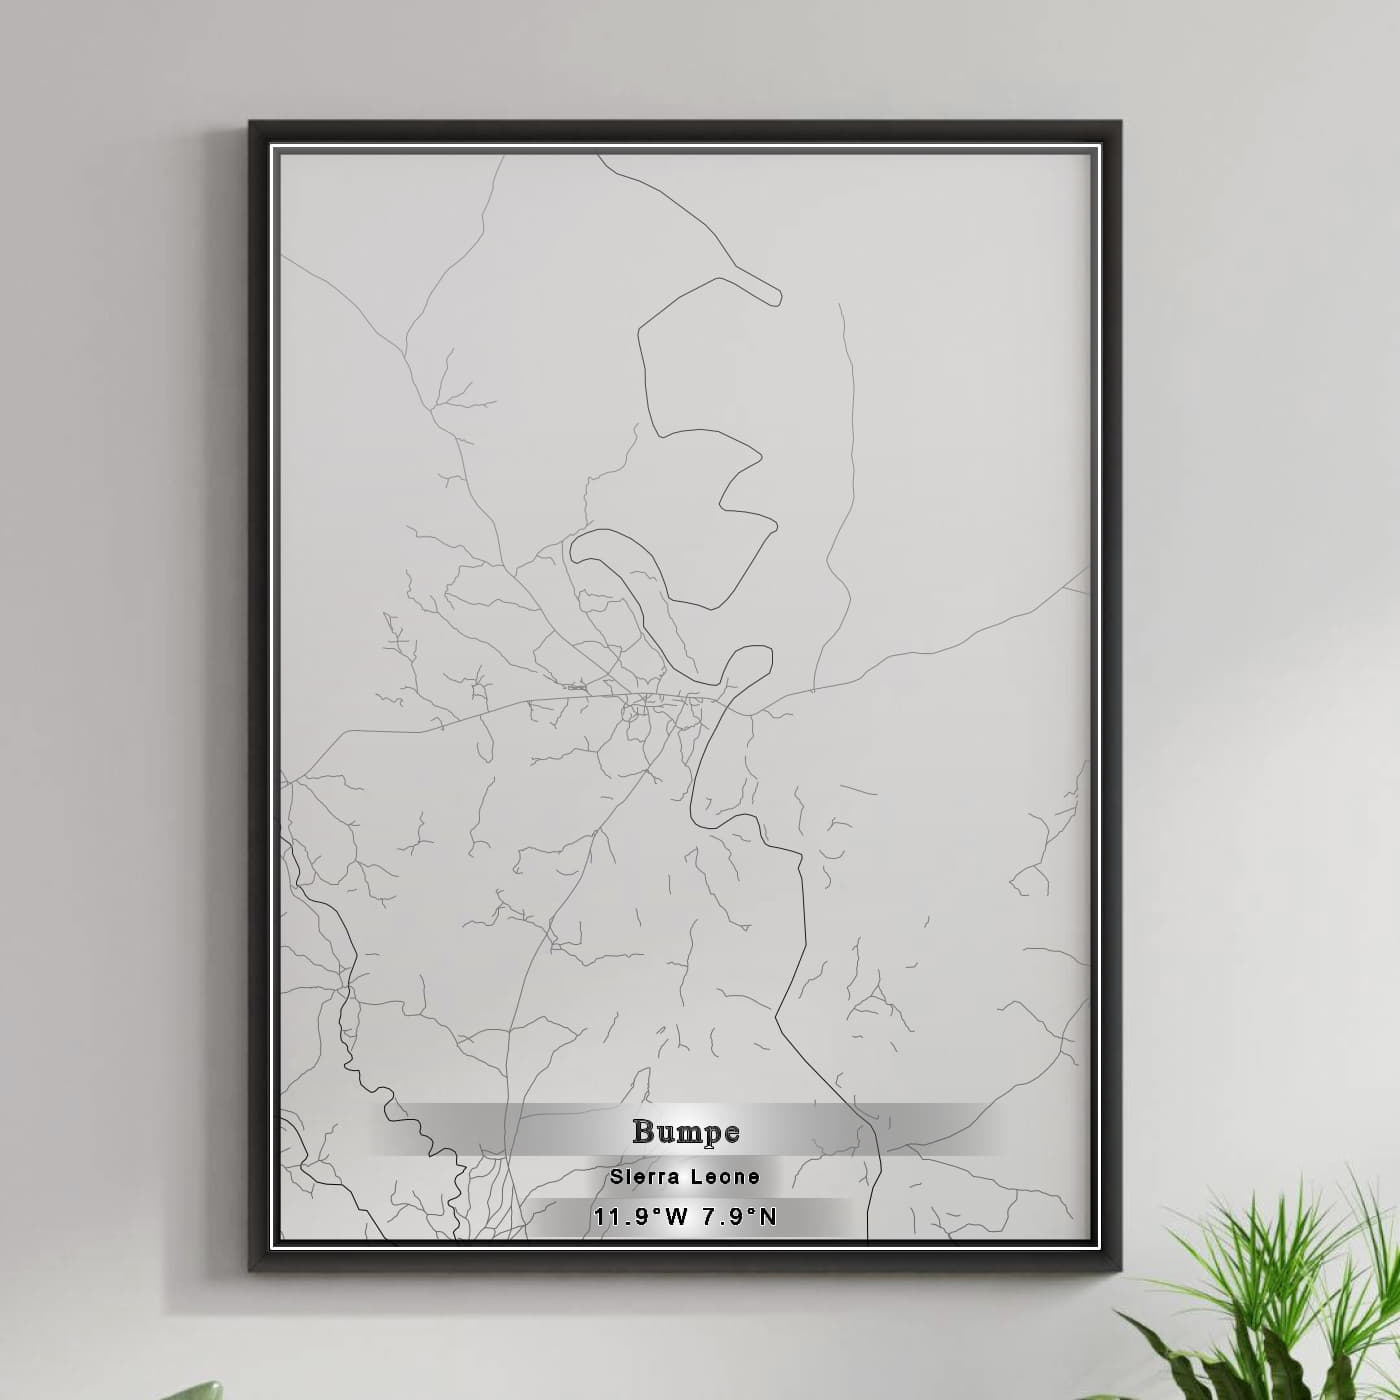 ROAD MAP OF BUMPE, SIERRA LEONE BY MAPBAKES